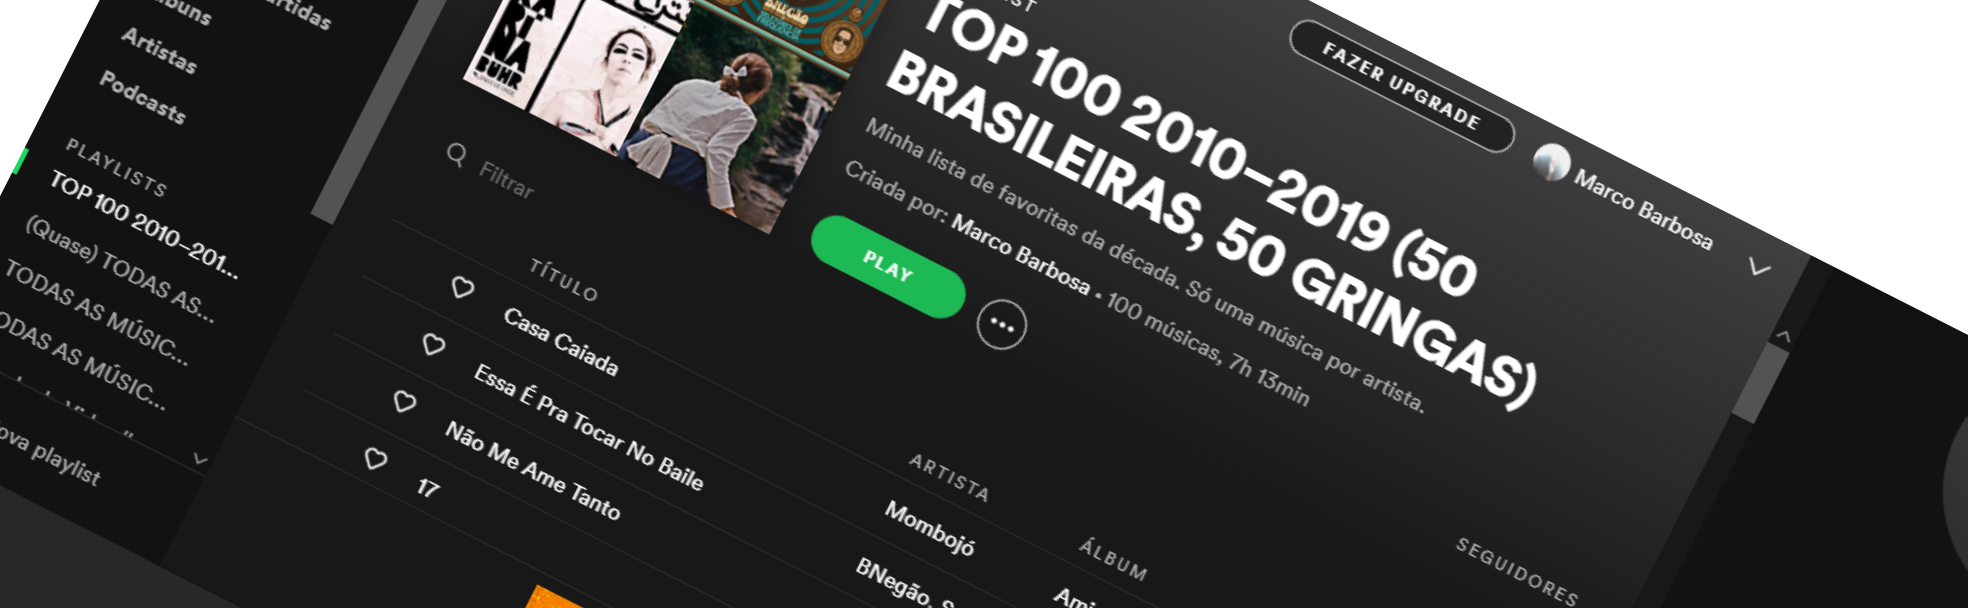 TOP 100 2010–2019 (50 BRASILEIRAS, 50 GRINGAS) | by Marco Antonio Barbosa |  Telhado de Vidro | Medium